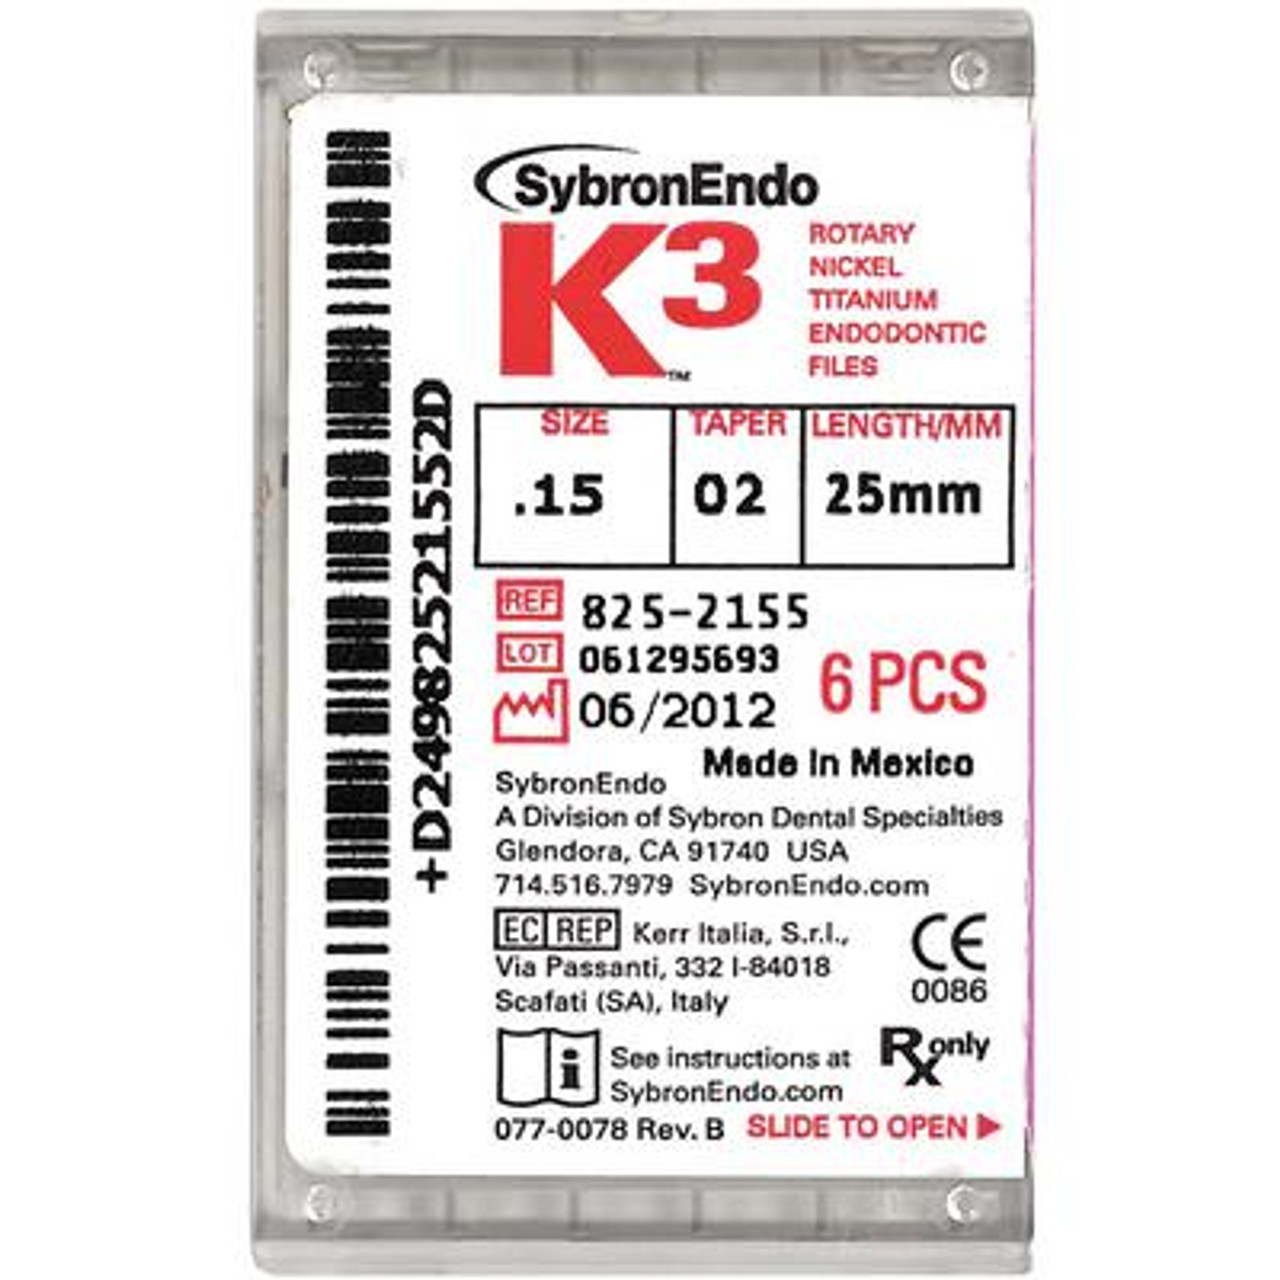 SybronEndo K3 XF Nickel-Titanium Files G Pack, 21mm, Assorted